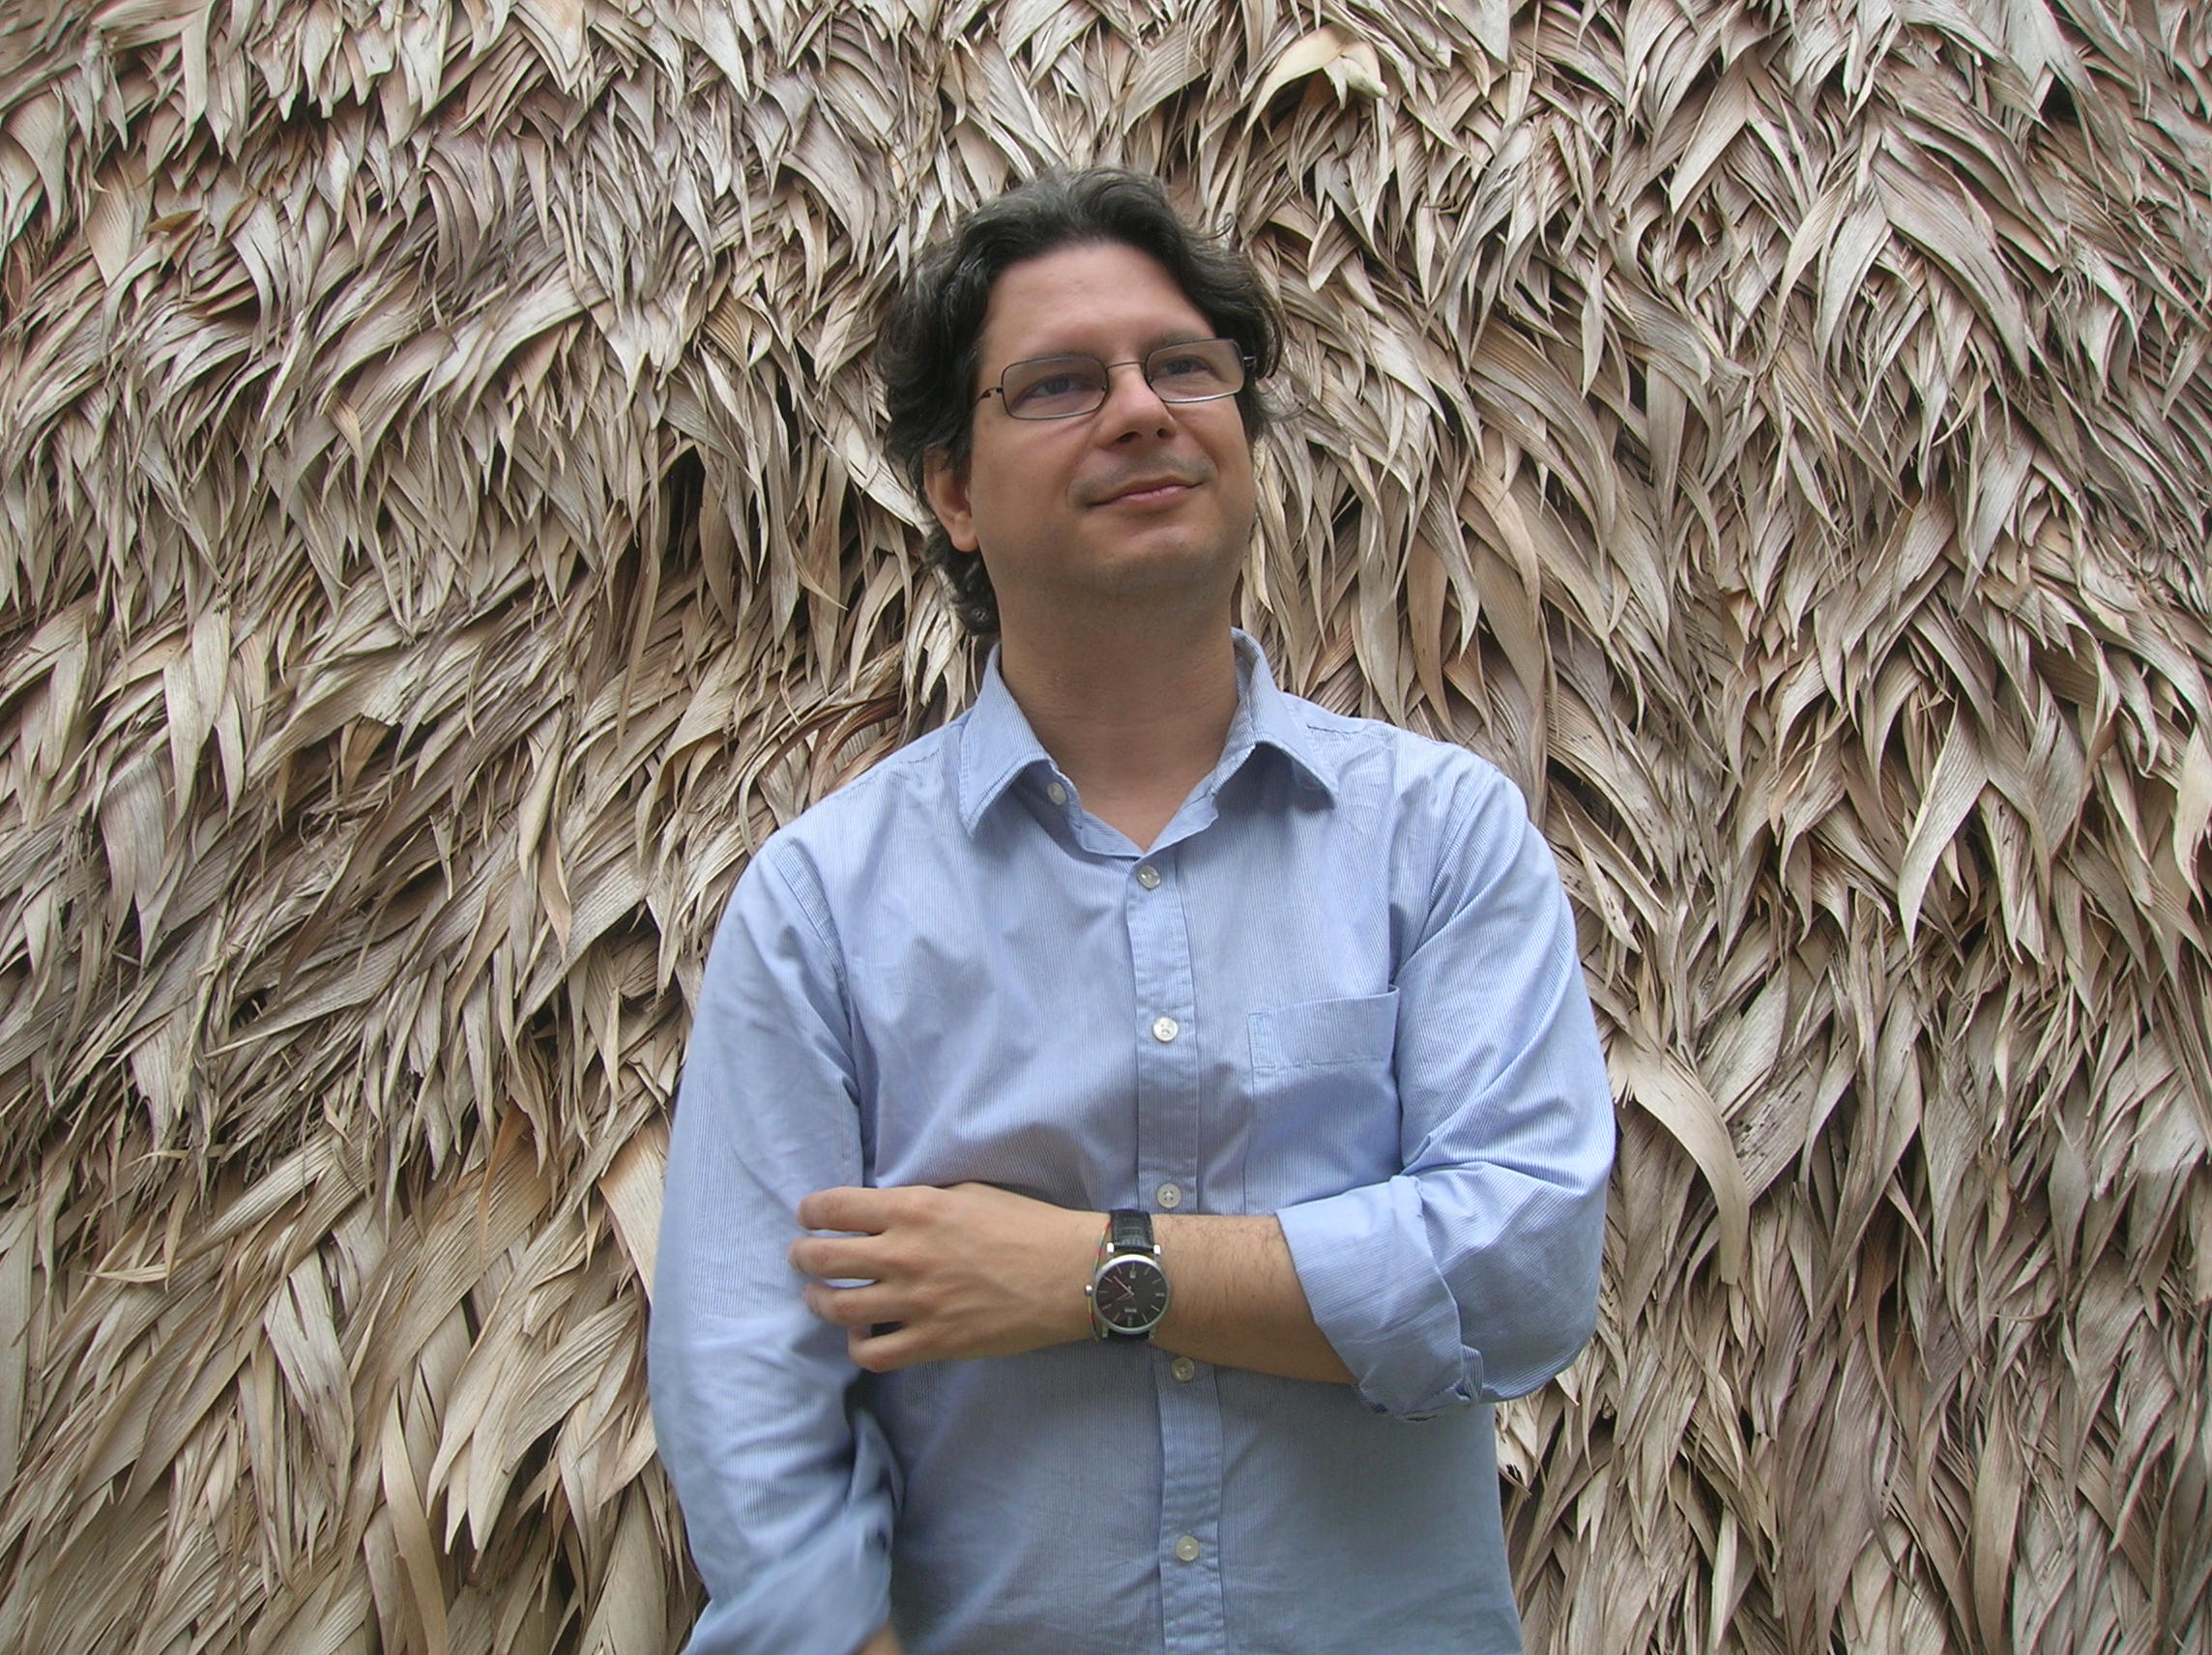 Sergio Roberto de Oliveira at Museu do Indio - DSCN9005